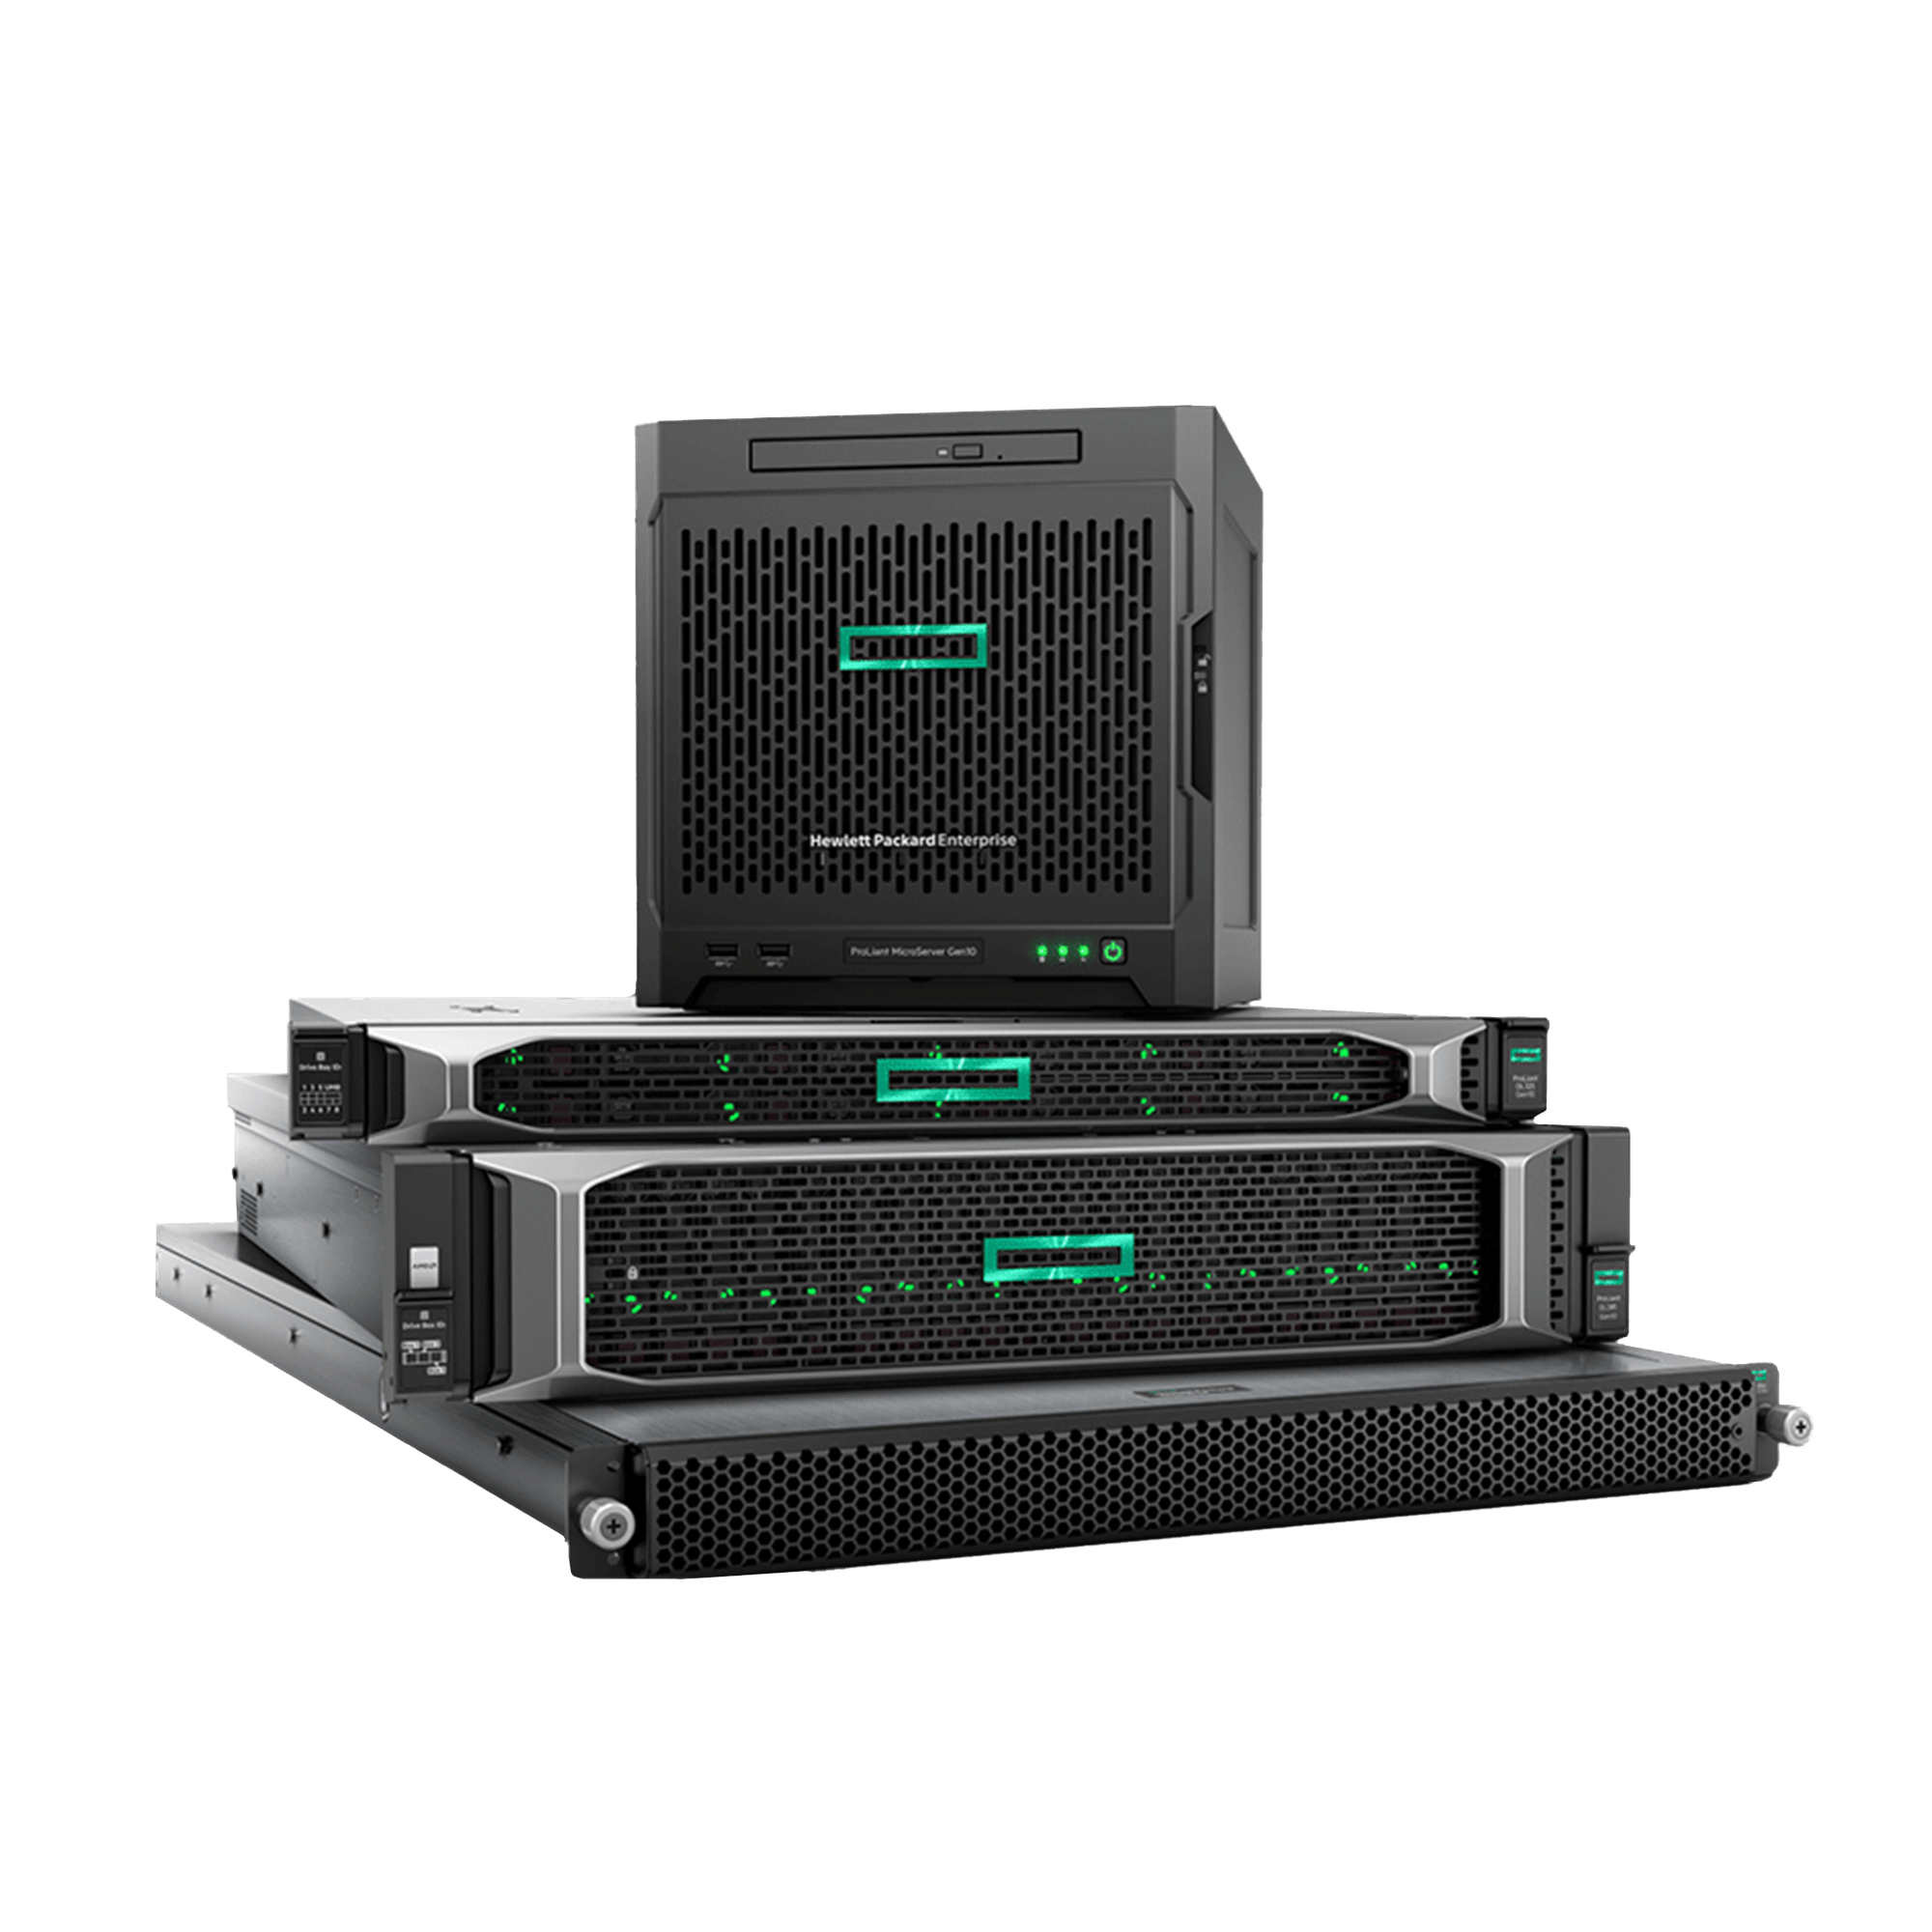 HPE ProLiant DL360 Gen10 4208 2.1GHz 8-core 1P 32GB-R MR416i-a 8SFF BC 800W PS Server